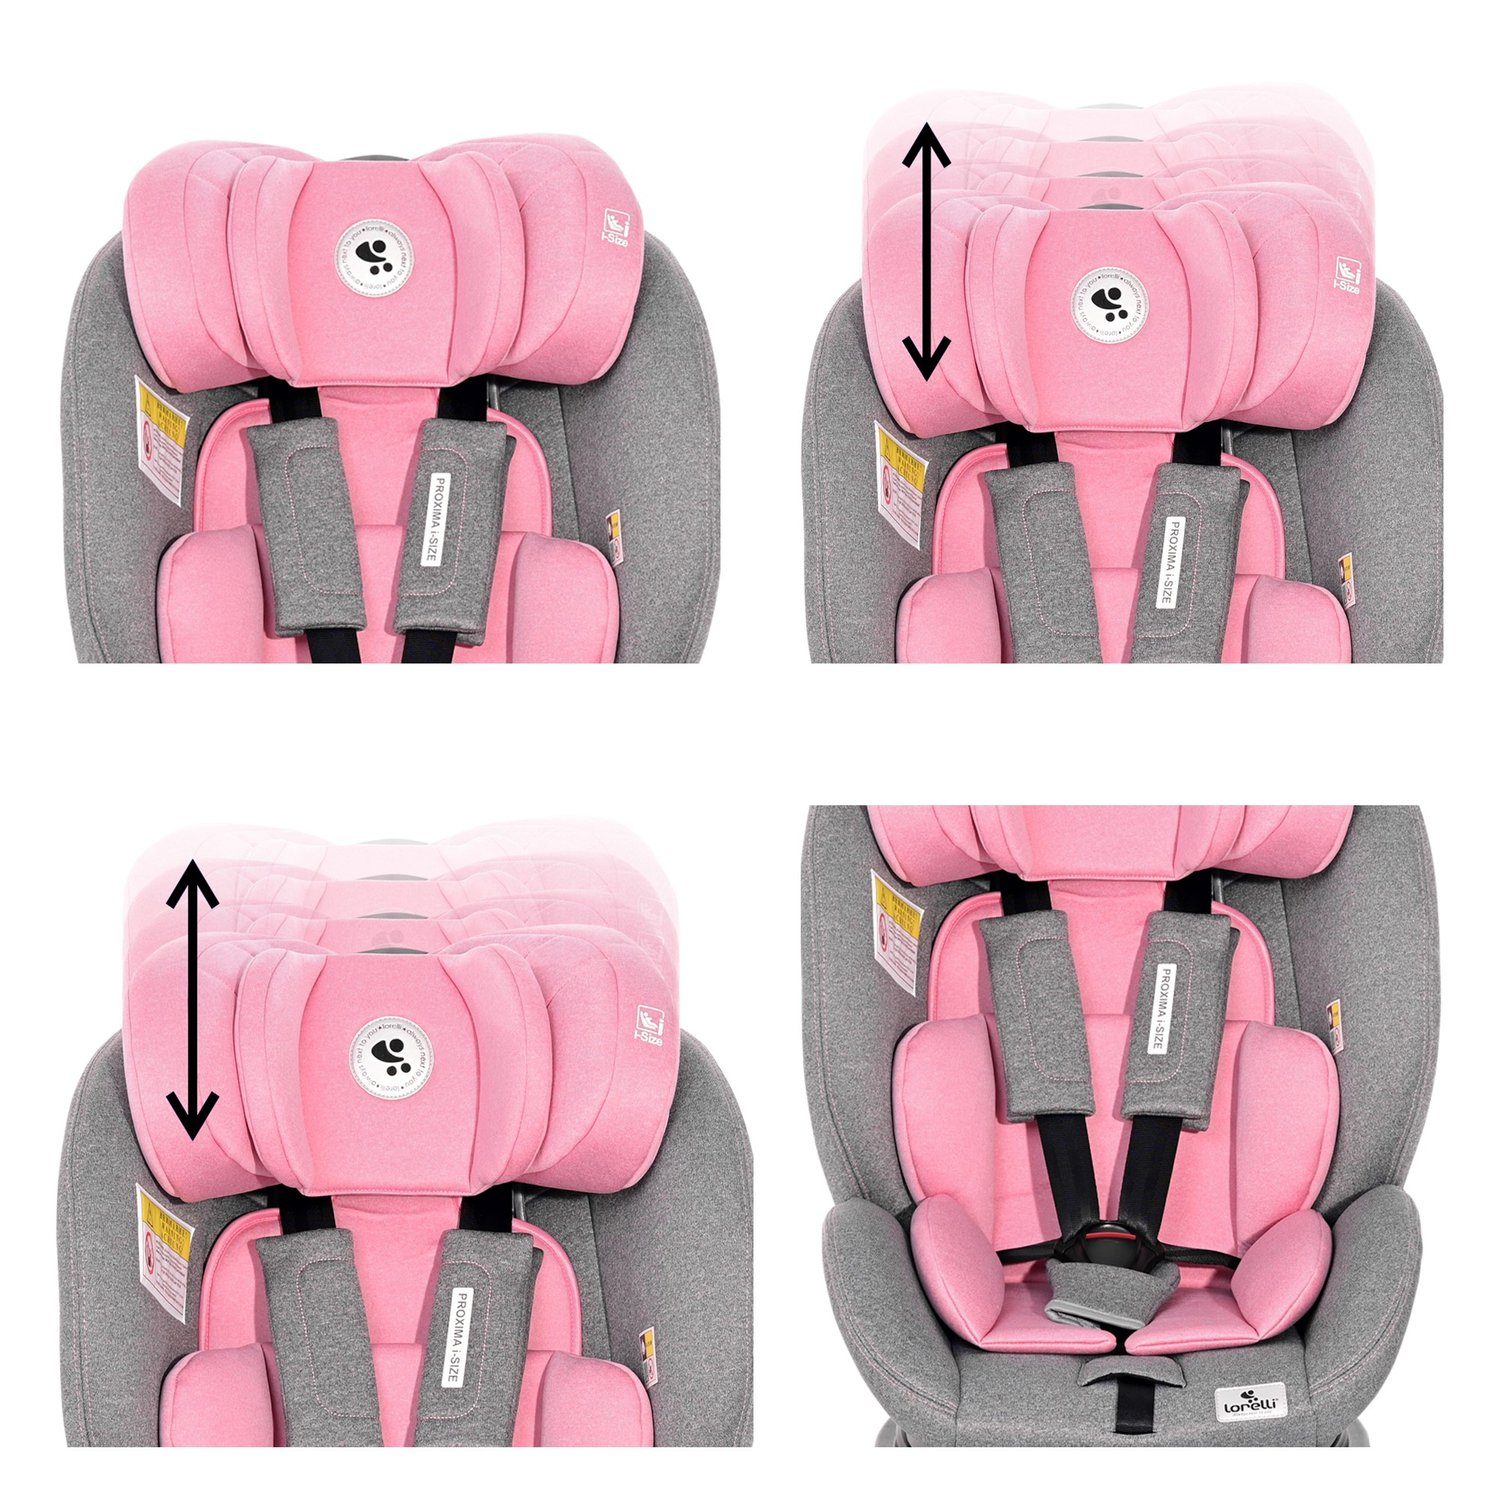 Proxima kg) 25 Autokindersitz rosa 25 kg, Isofix bis: 0/1/2 verstellbar Kindersitz Gruppe - Lorelli i-Size, (0